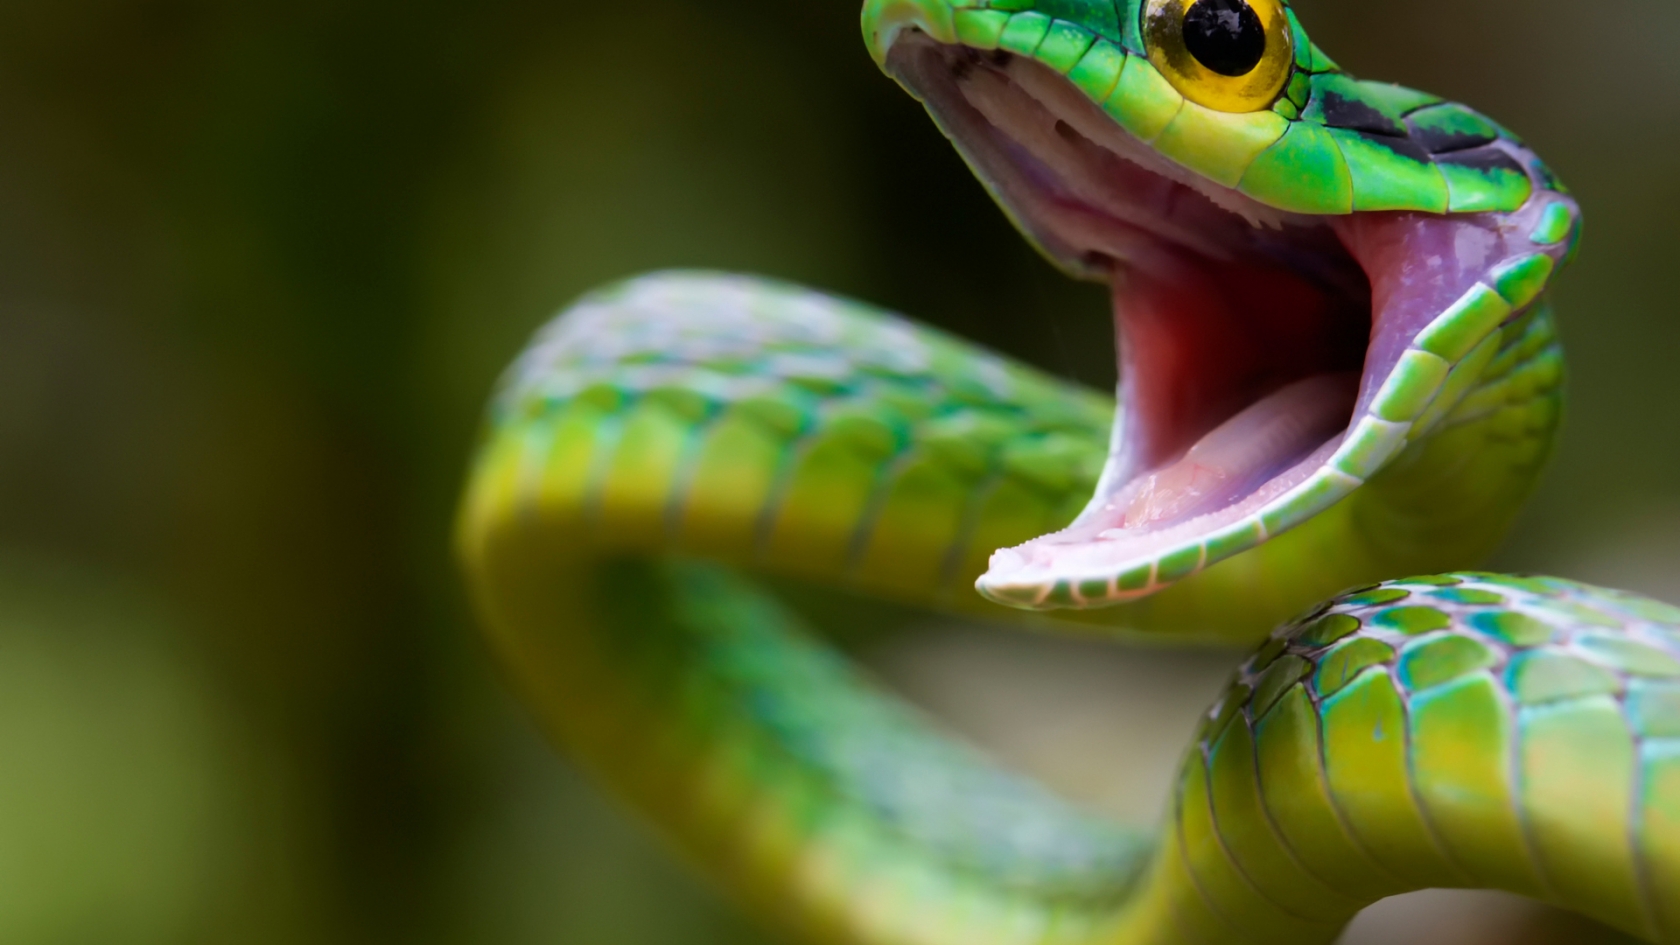 Green Snake Attack for 1680 x 945 HDTV resolution